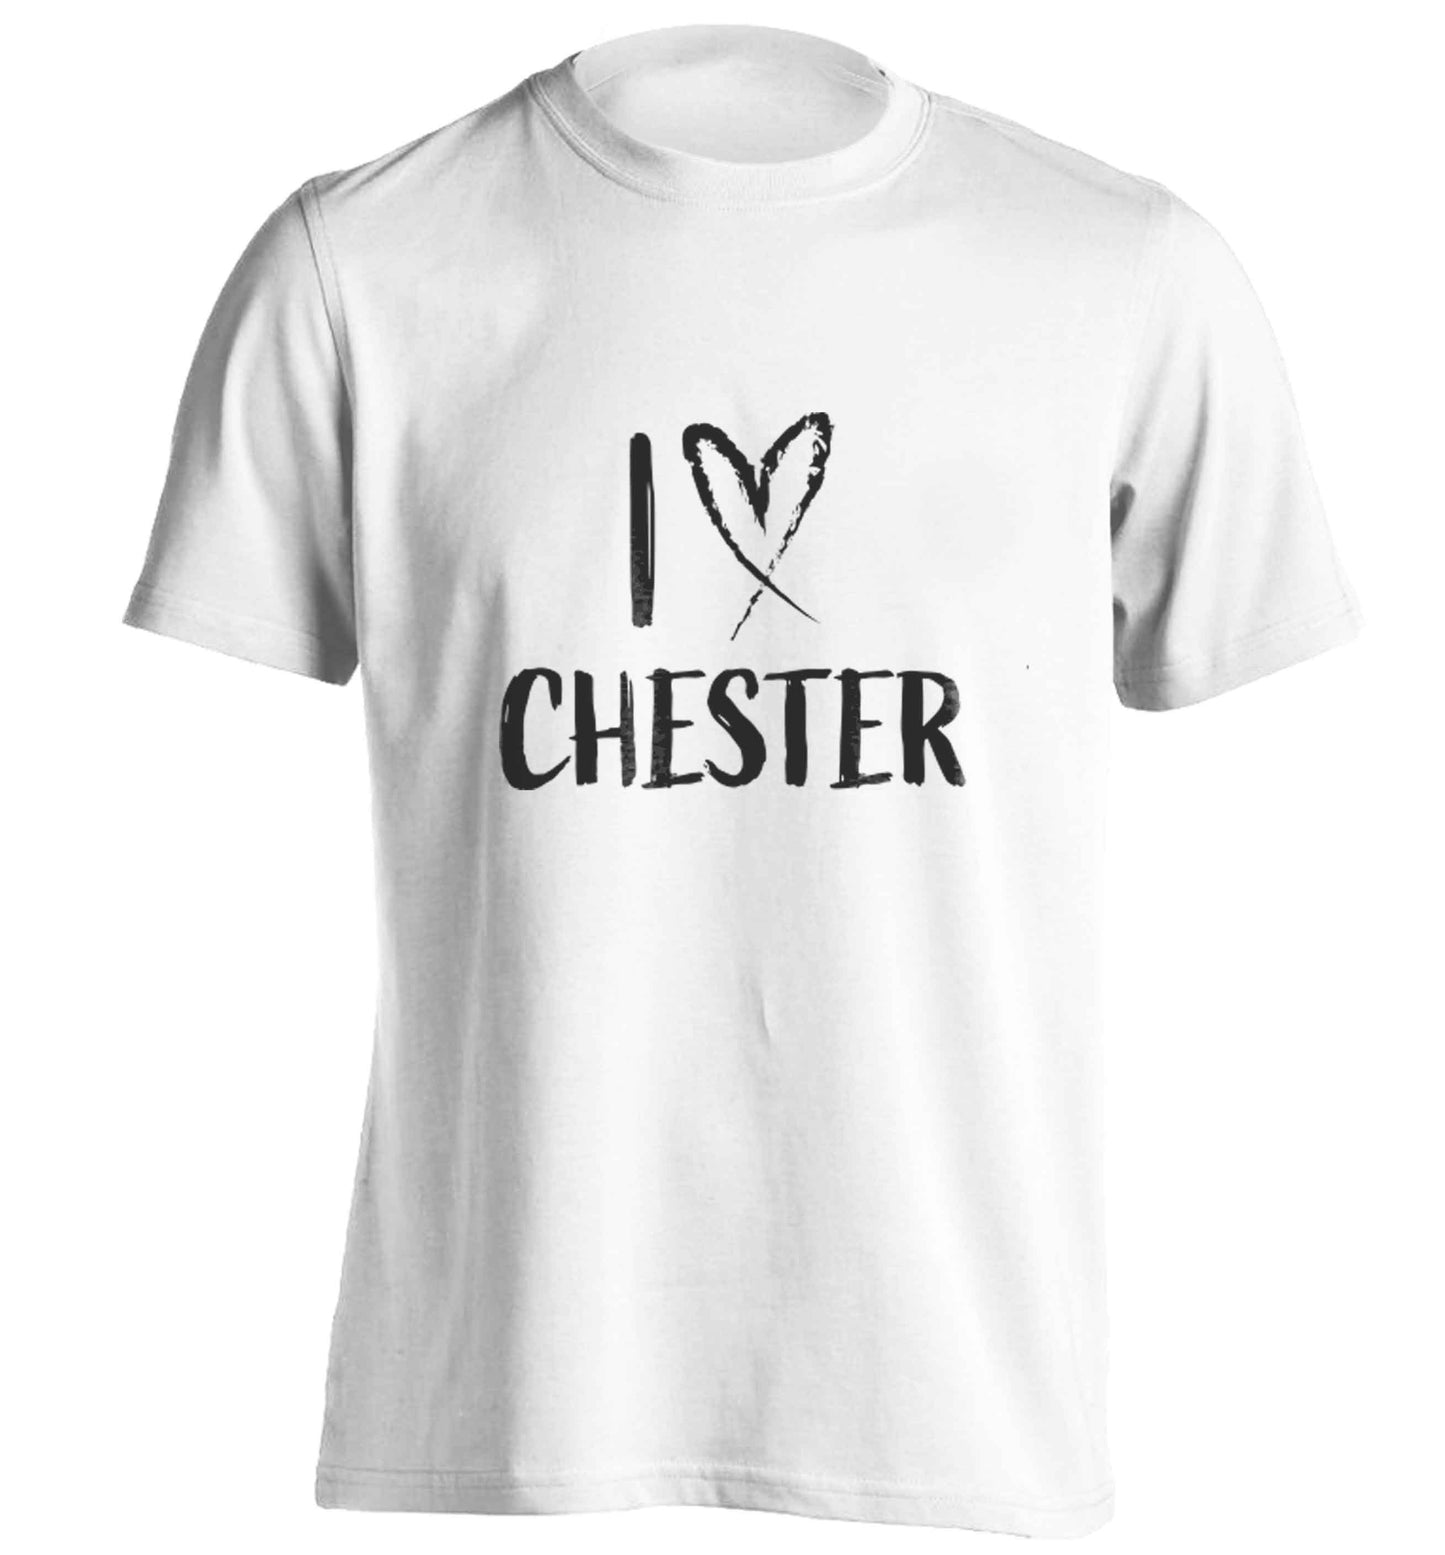 I love Chester adults unisex white Tshirt 2XL